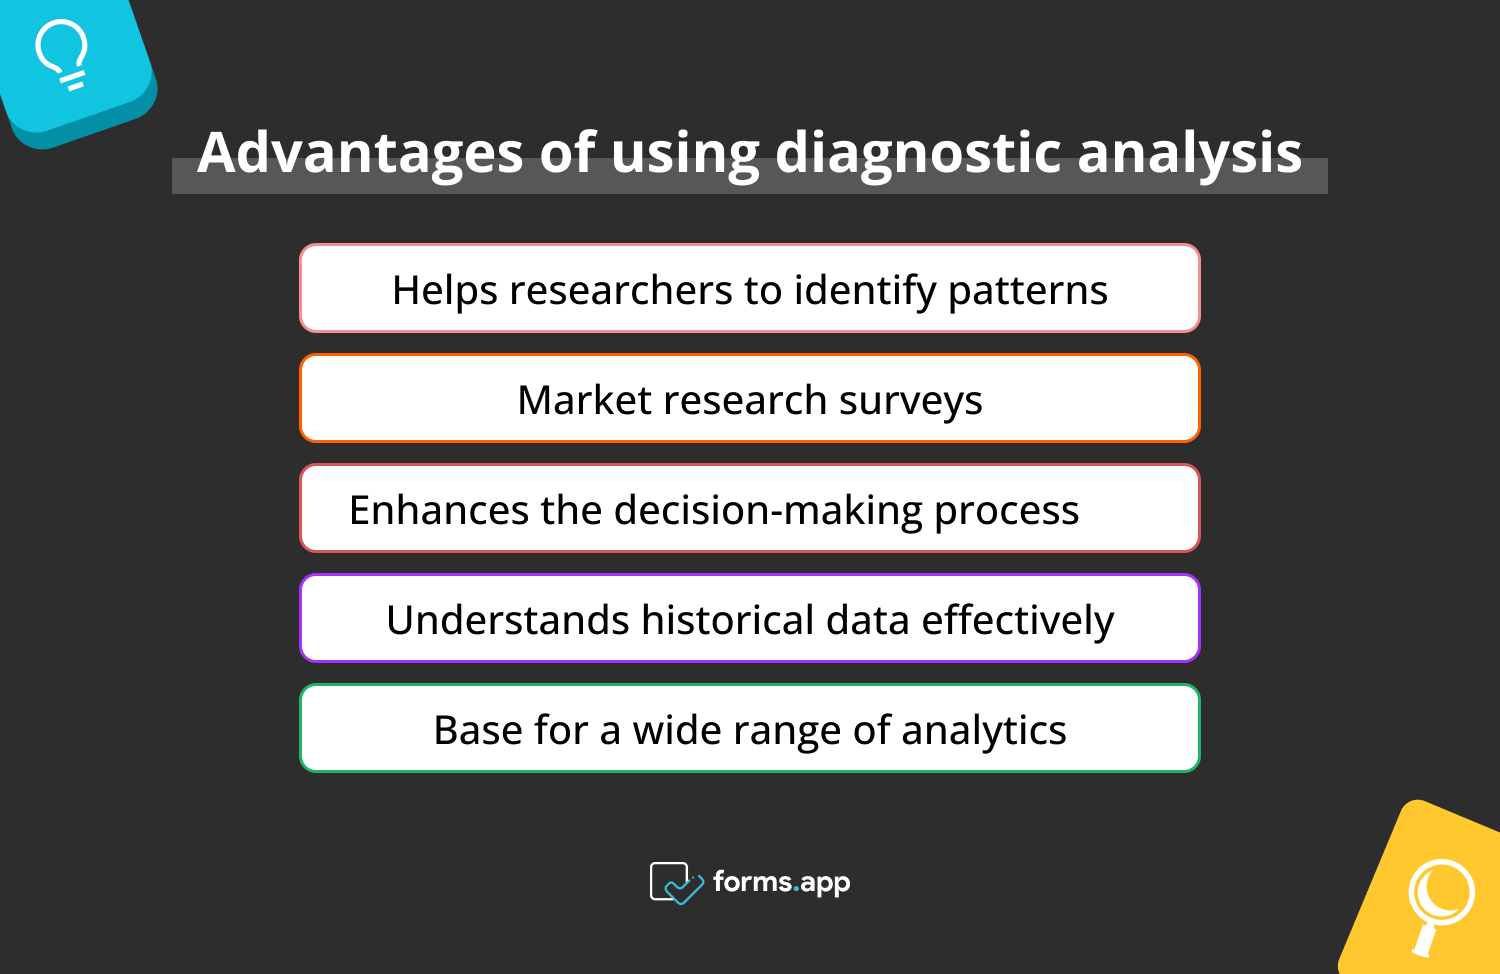 Pros of using diagnostics analysis